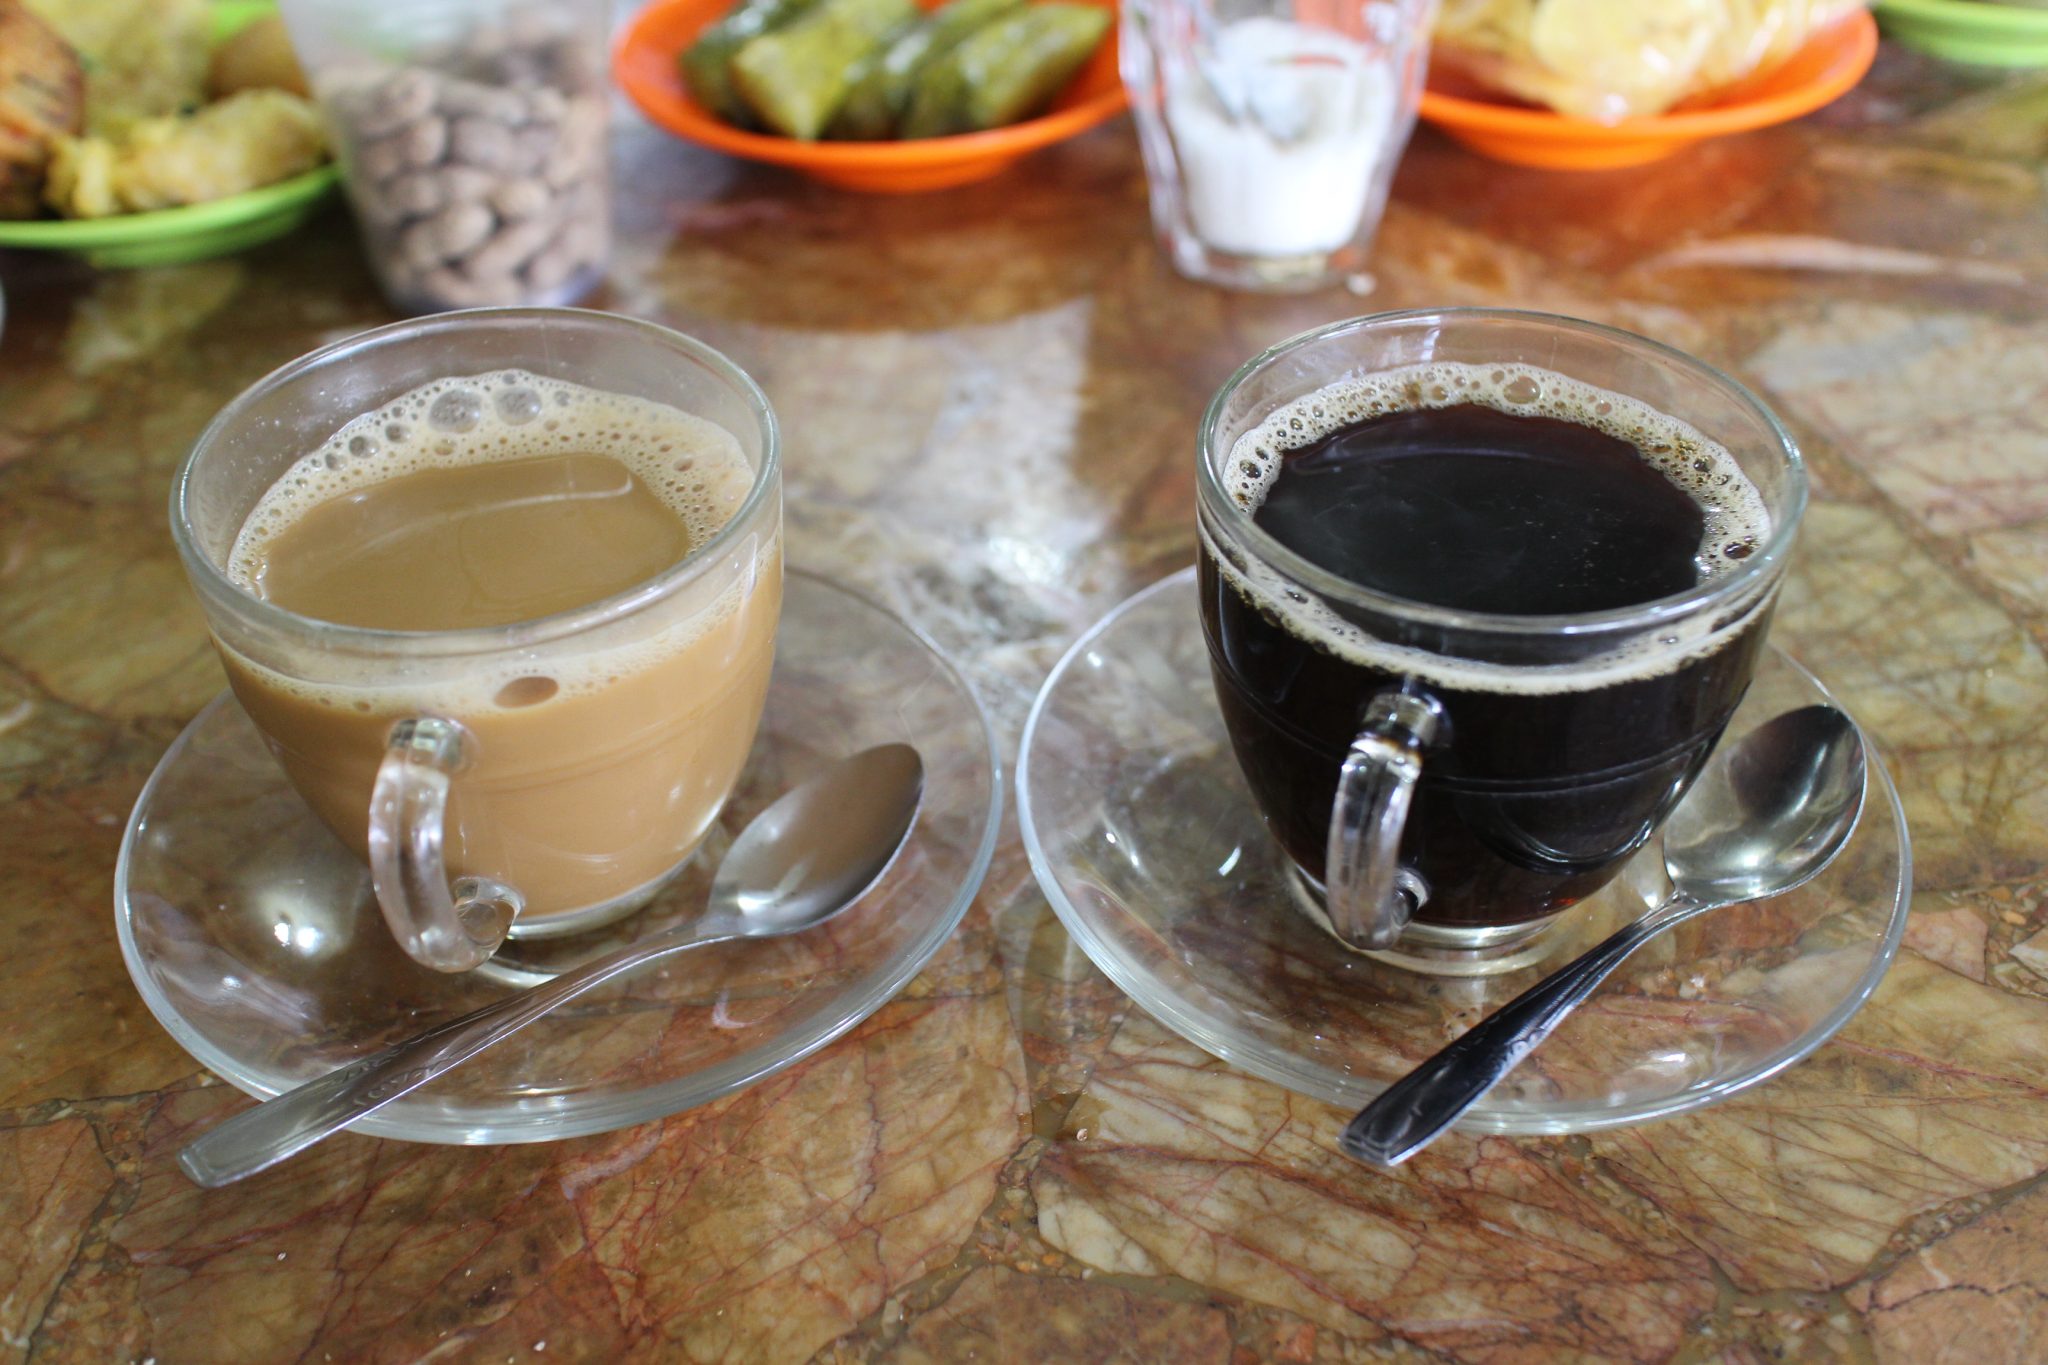 Warung Kopi Kali Uluh - Coffee Shop Recommend!